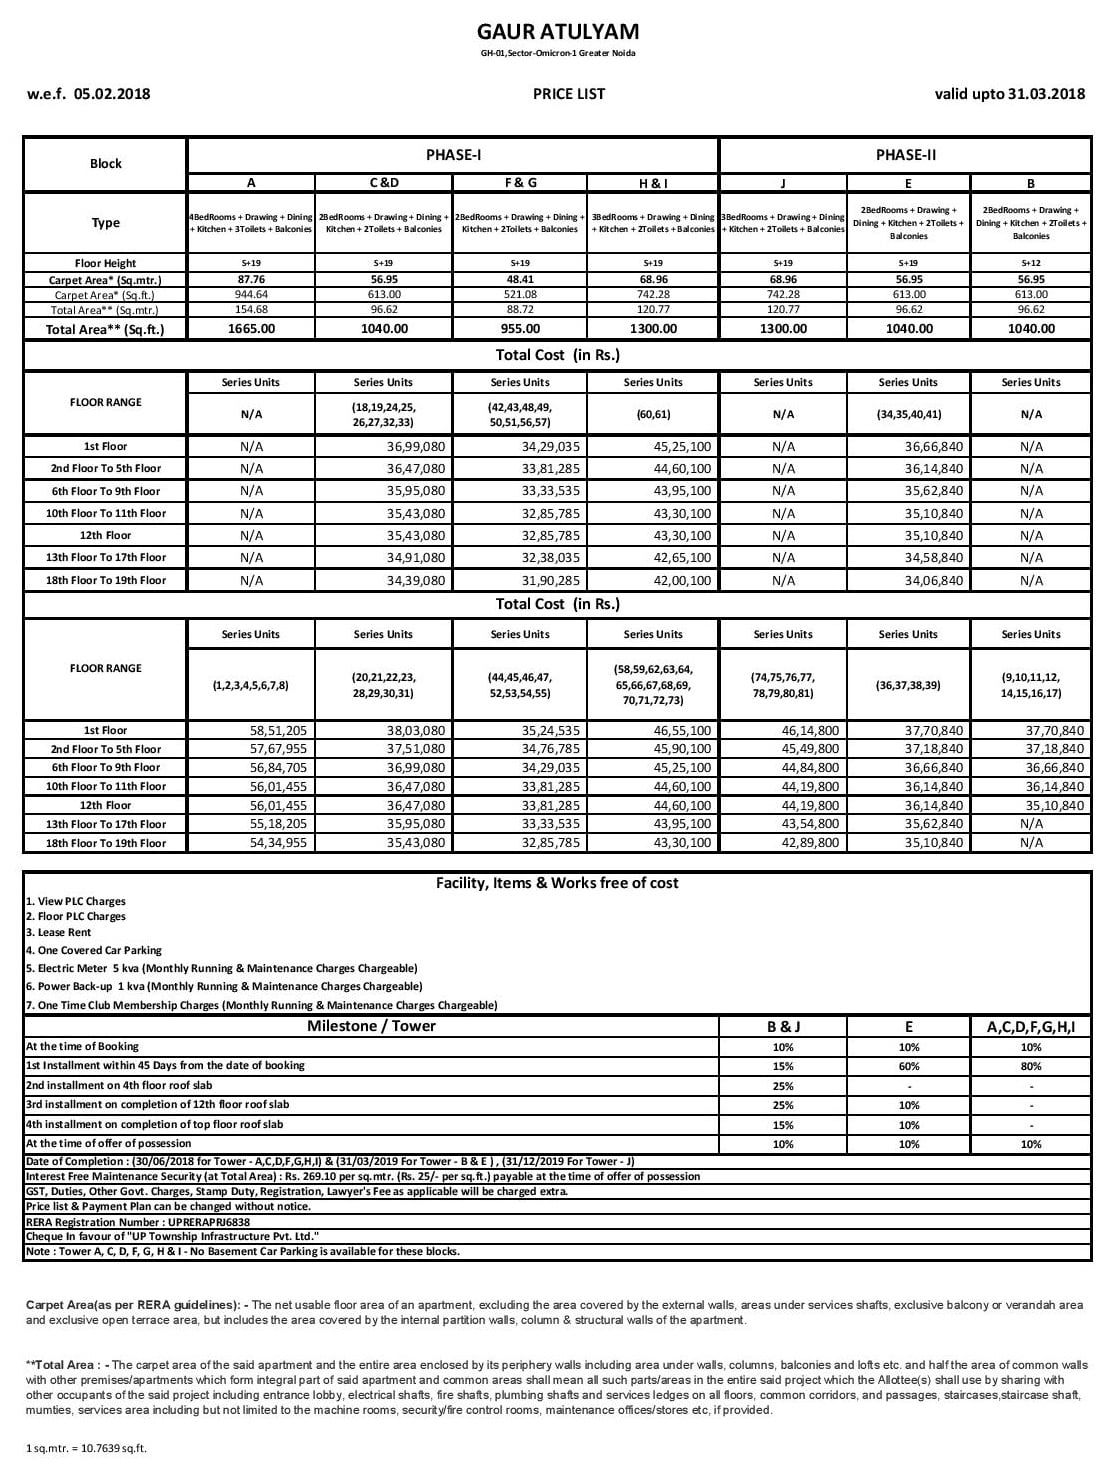 Gaur Atulyam Price List